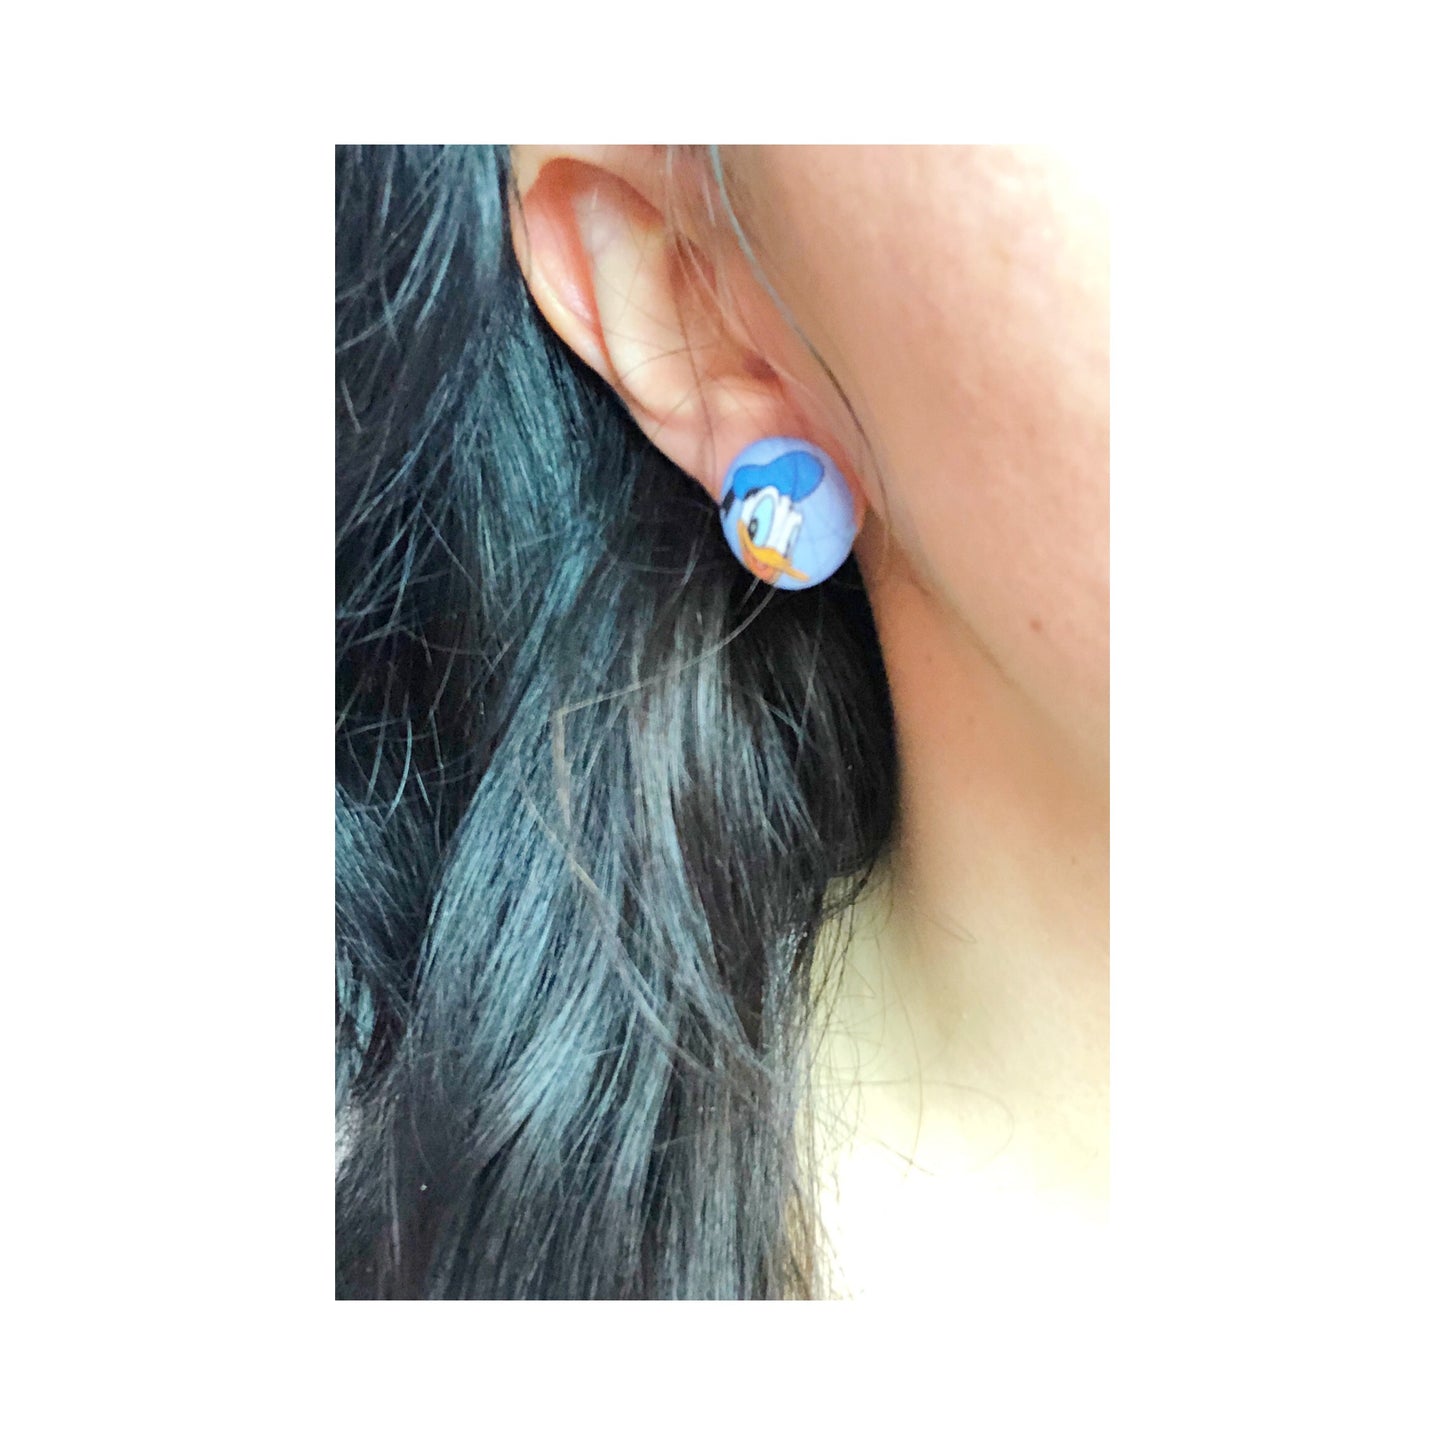 Donald Blue Fabric Button Earrings